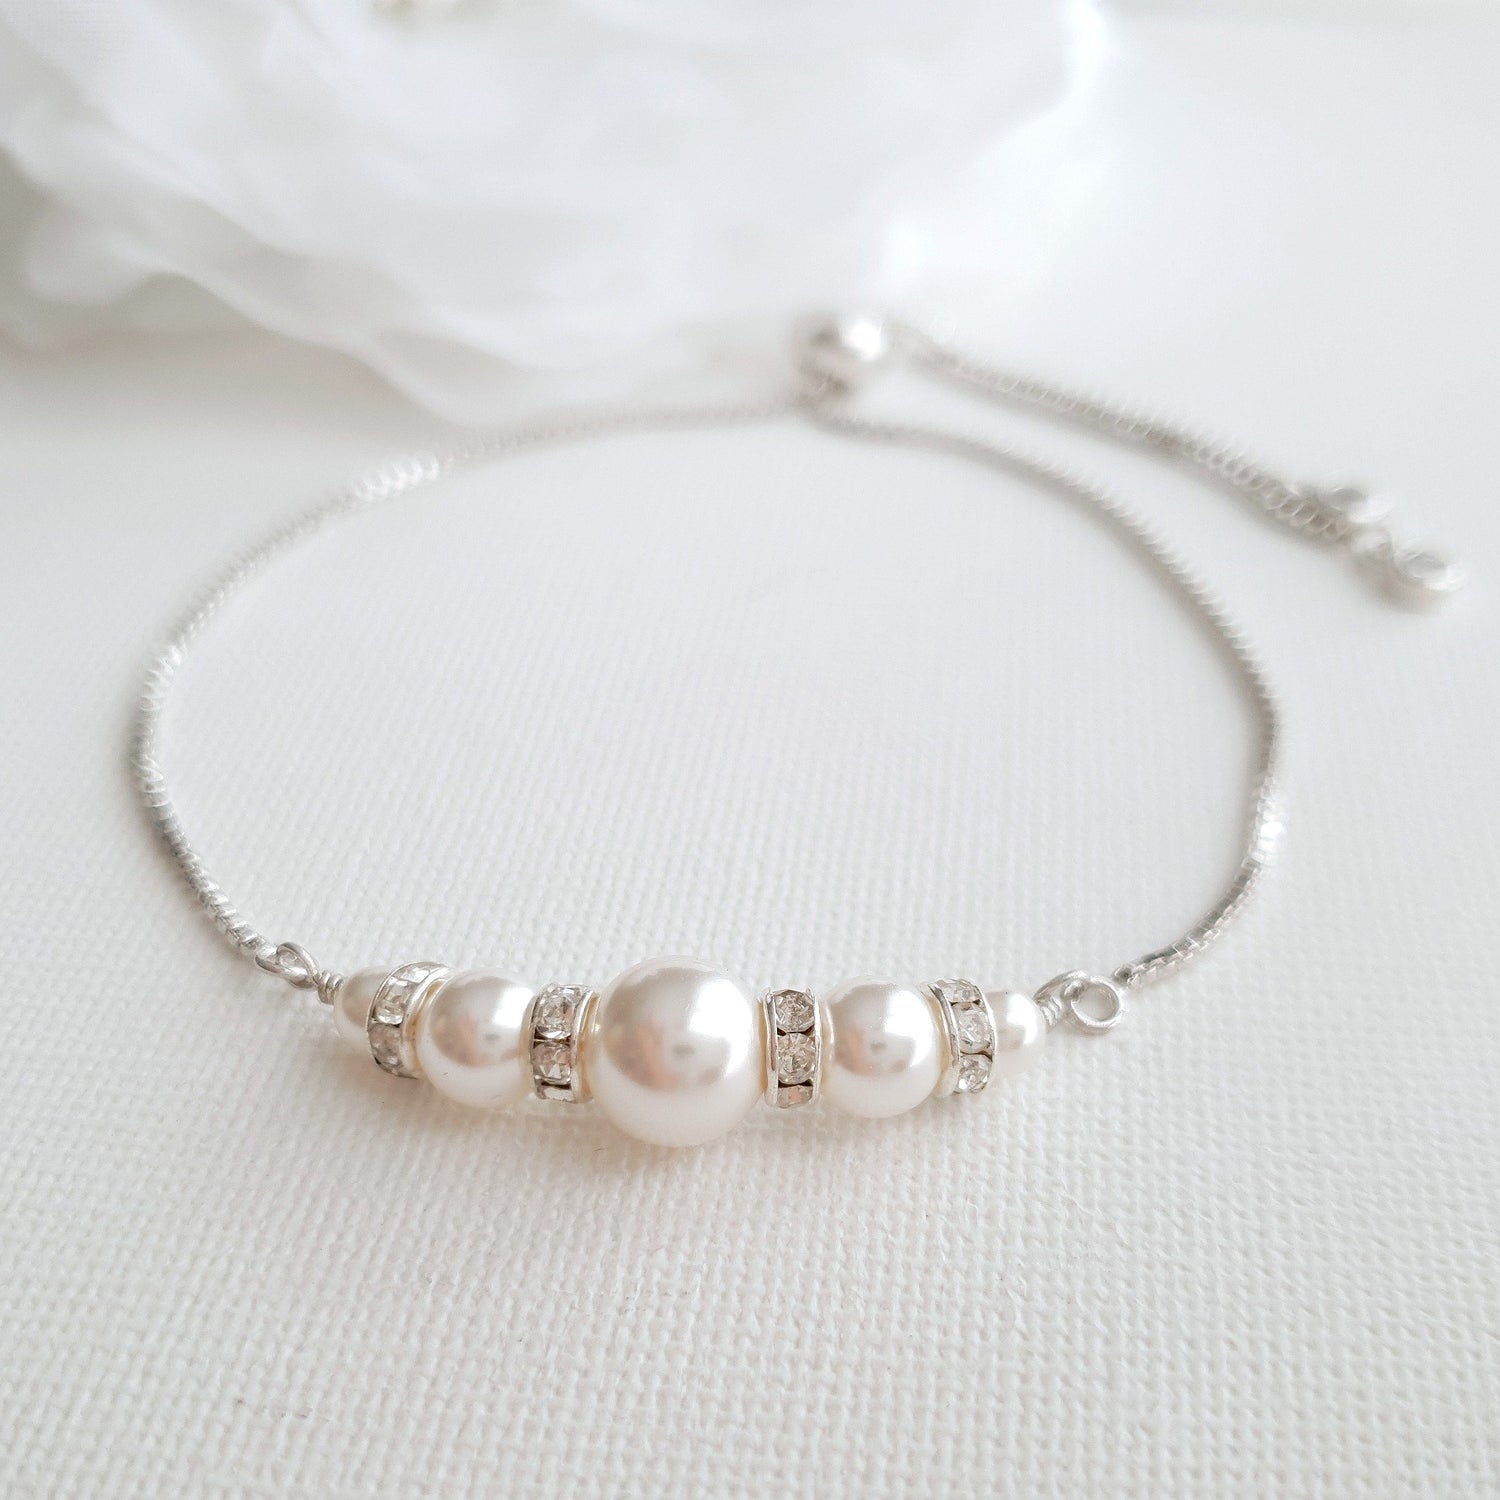 Adjustable Swarovski Pearl Bracelet for Weddings